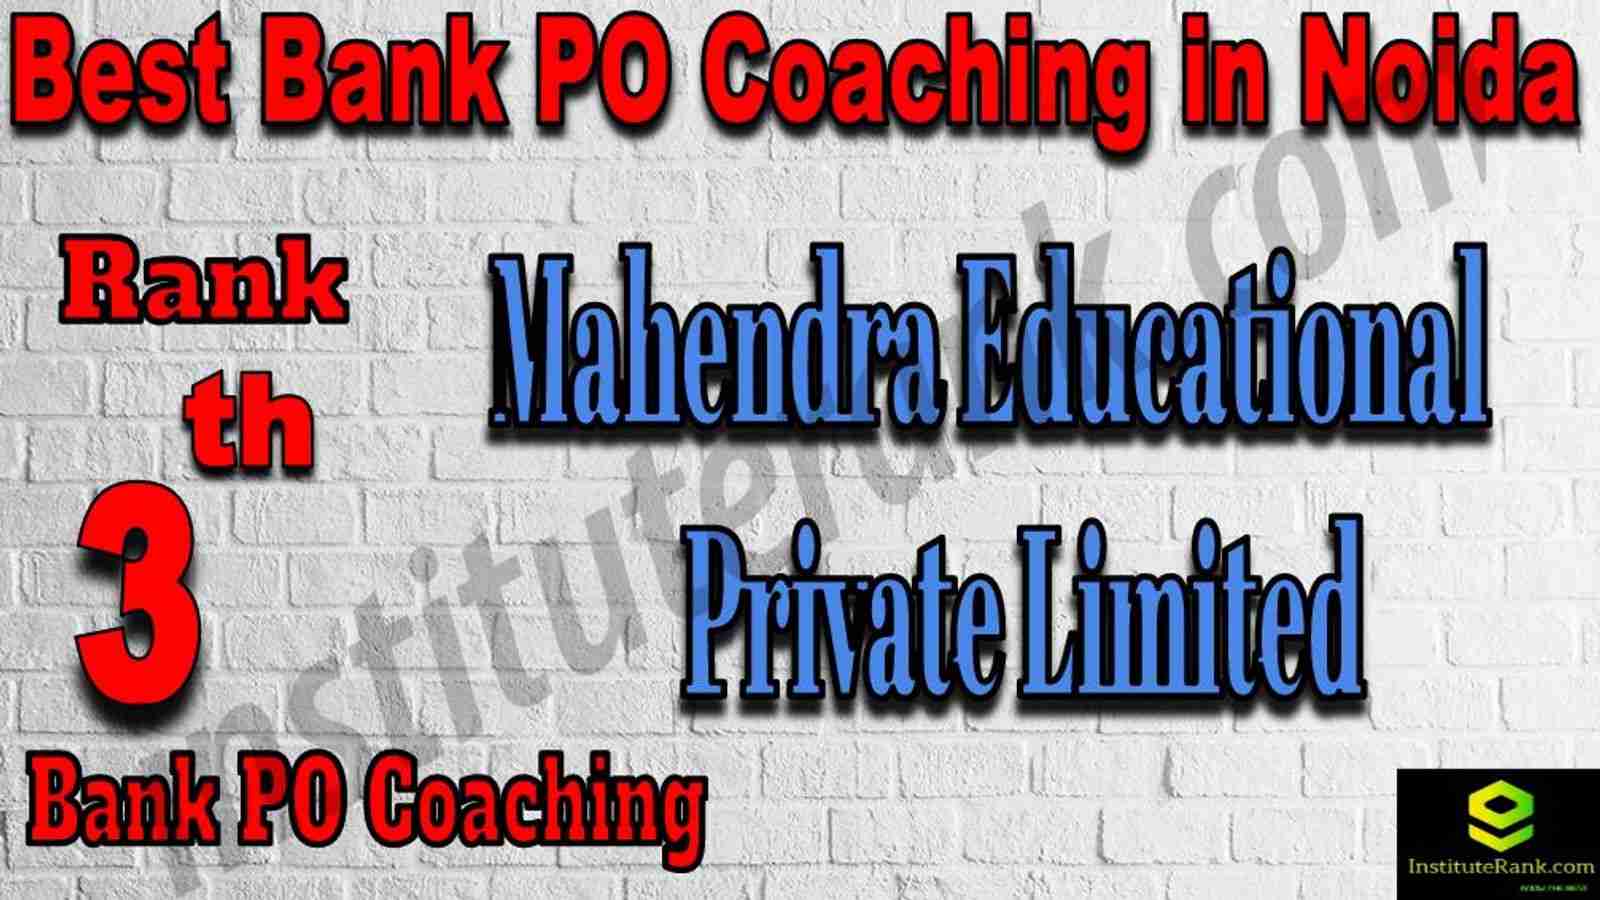 3rd Best Bank PO Coaching in Noida